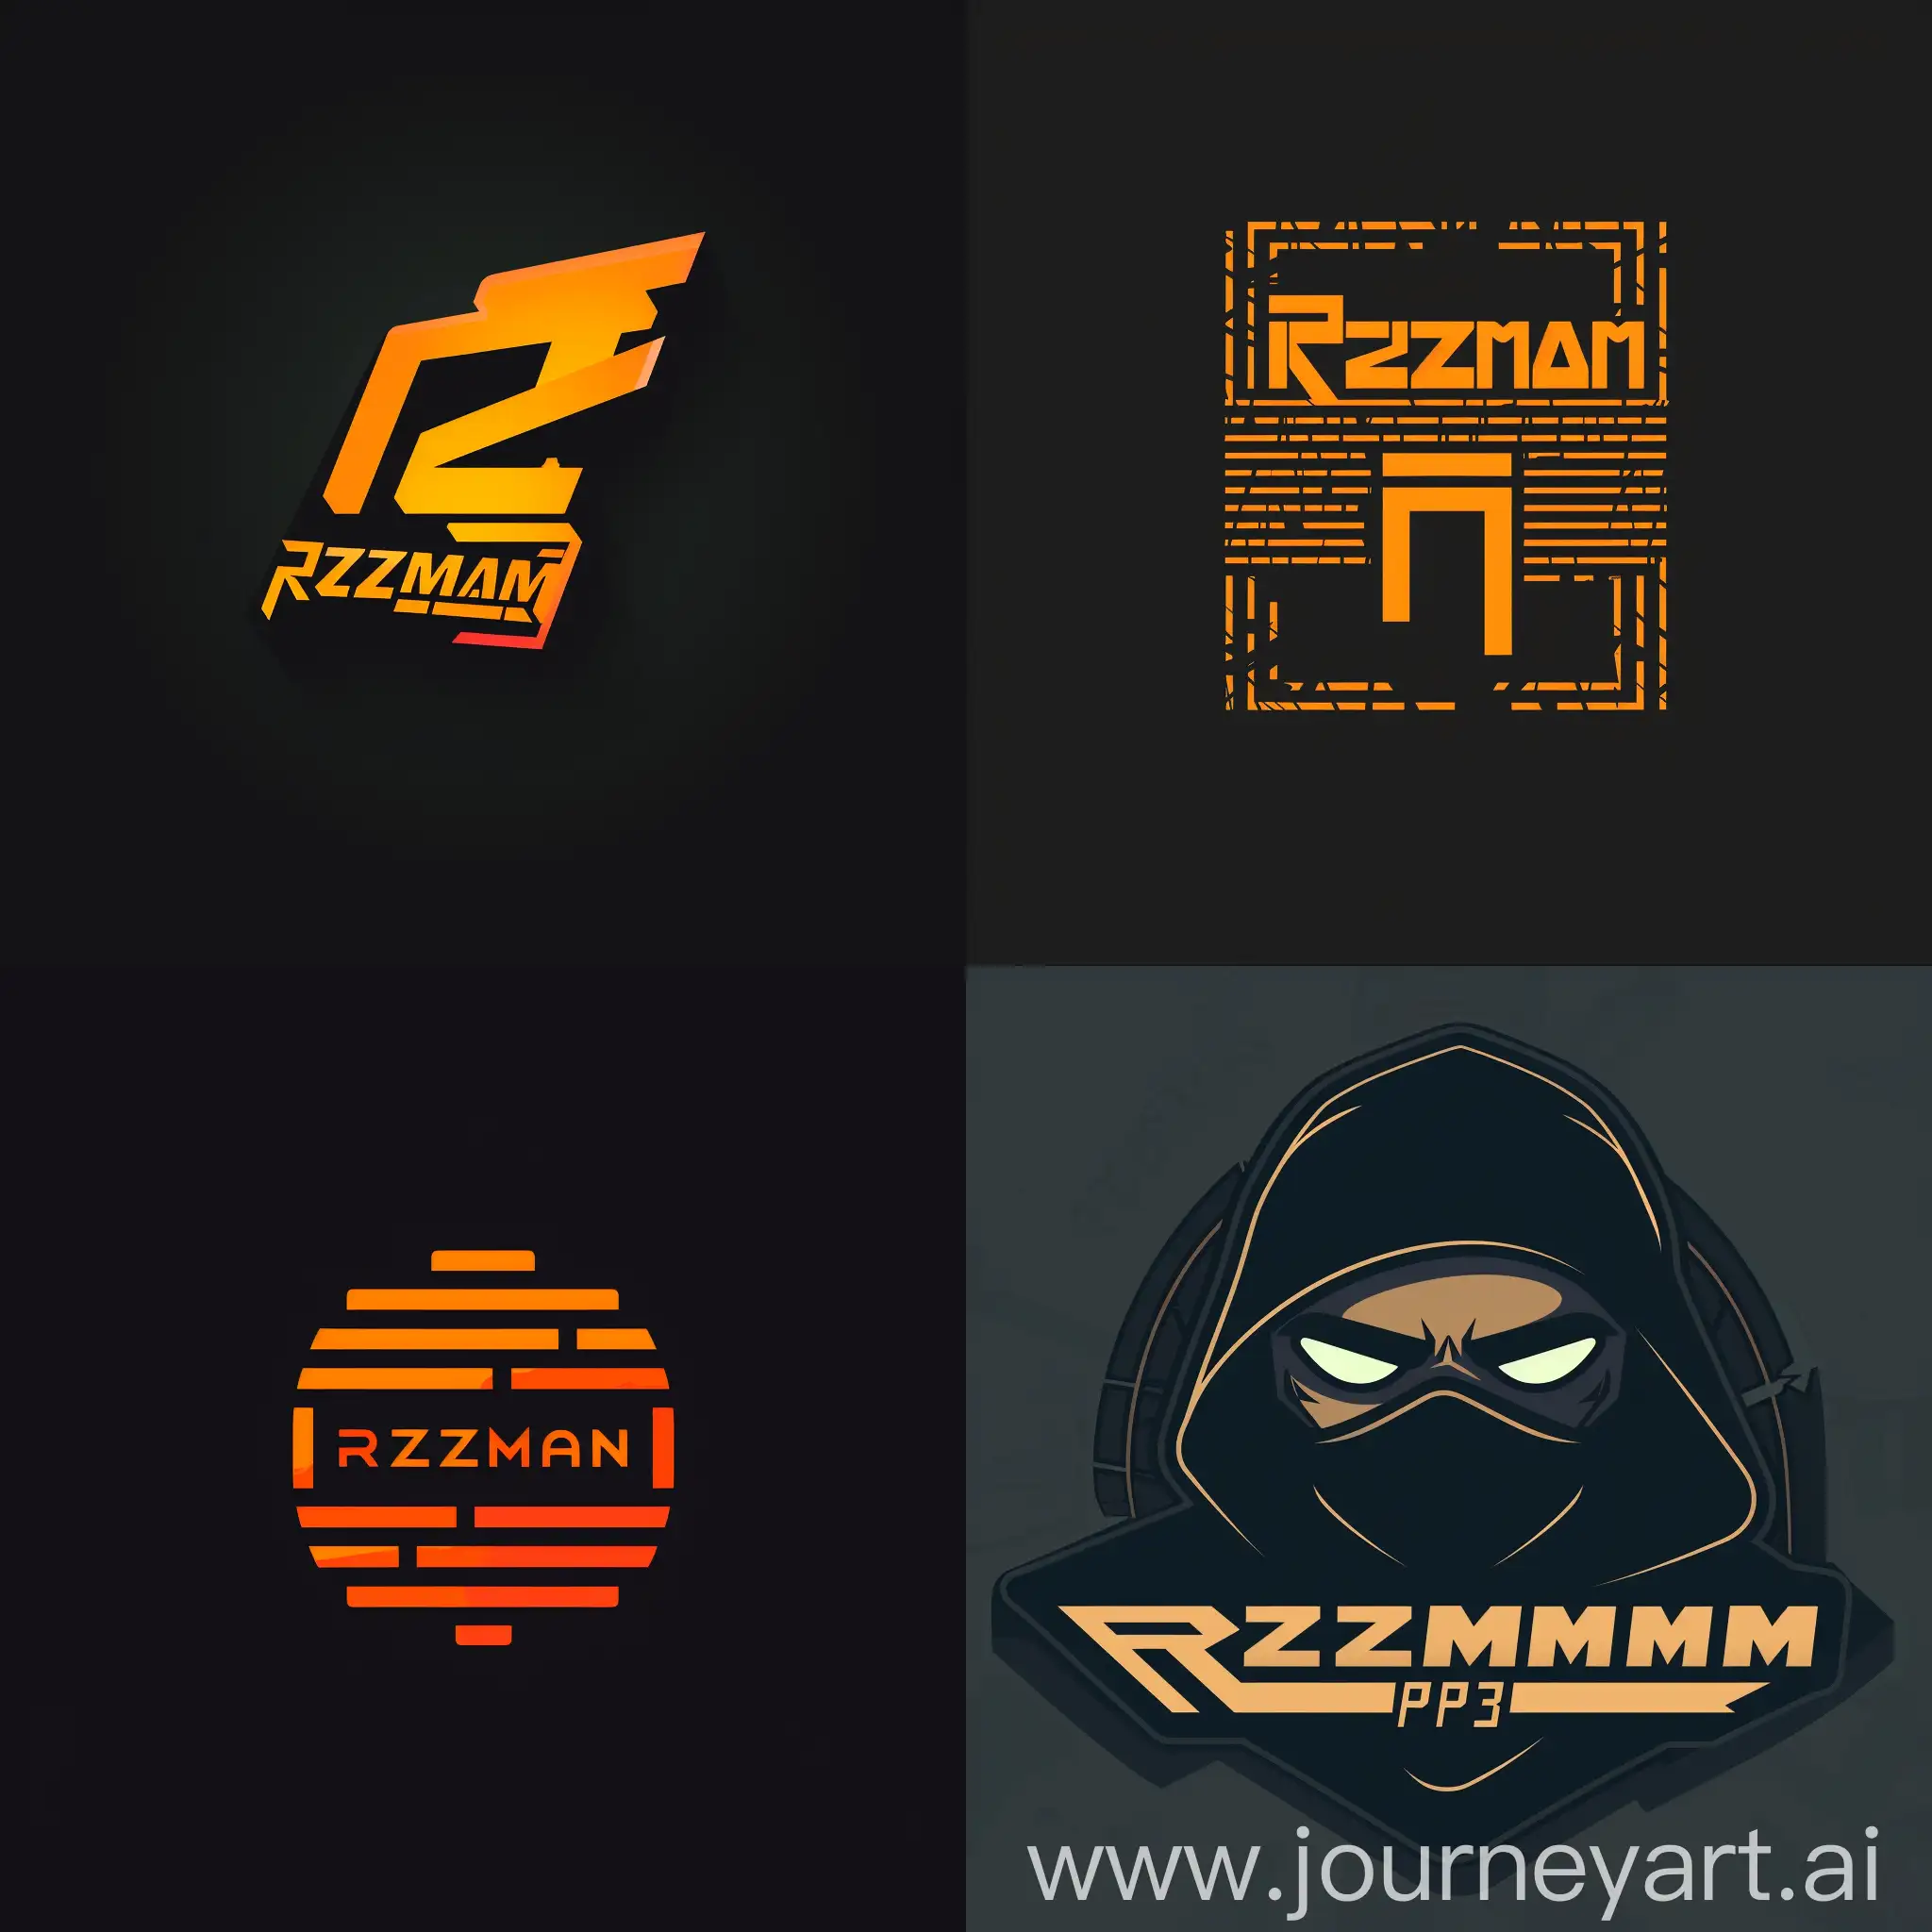 Notepad-Logo-Design-with-Razhman-Theme